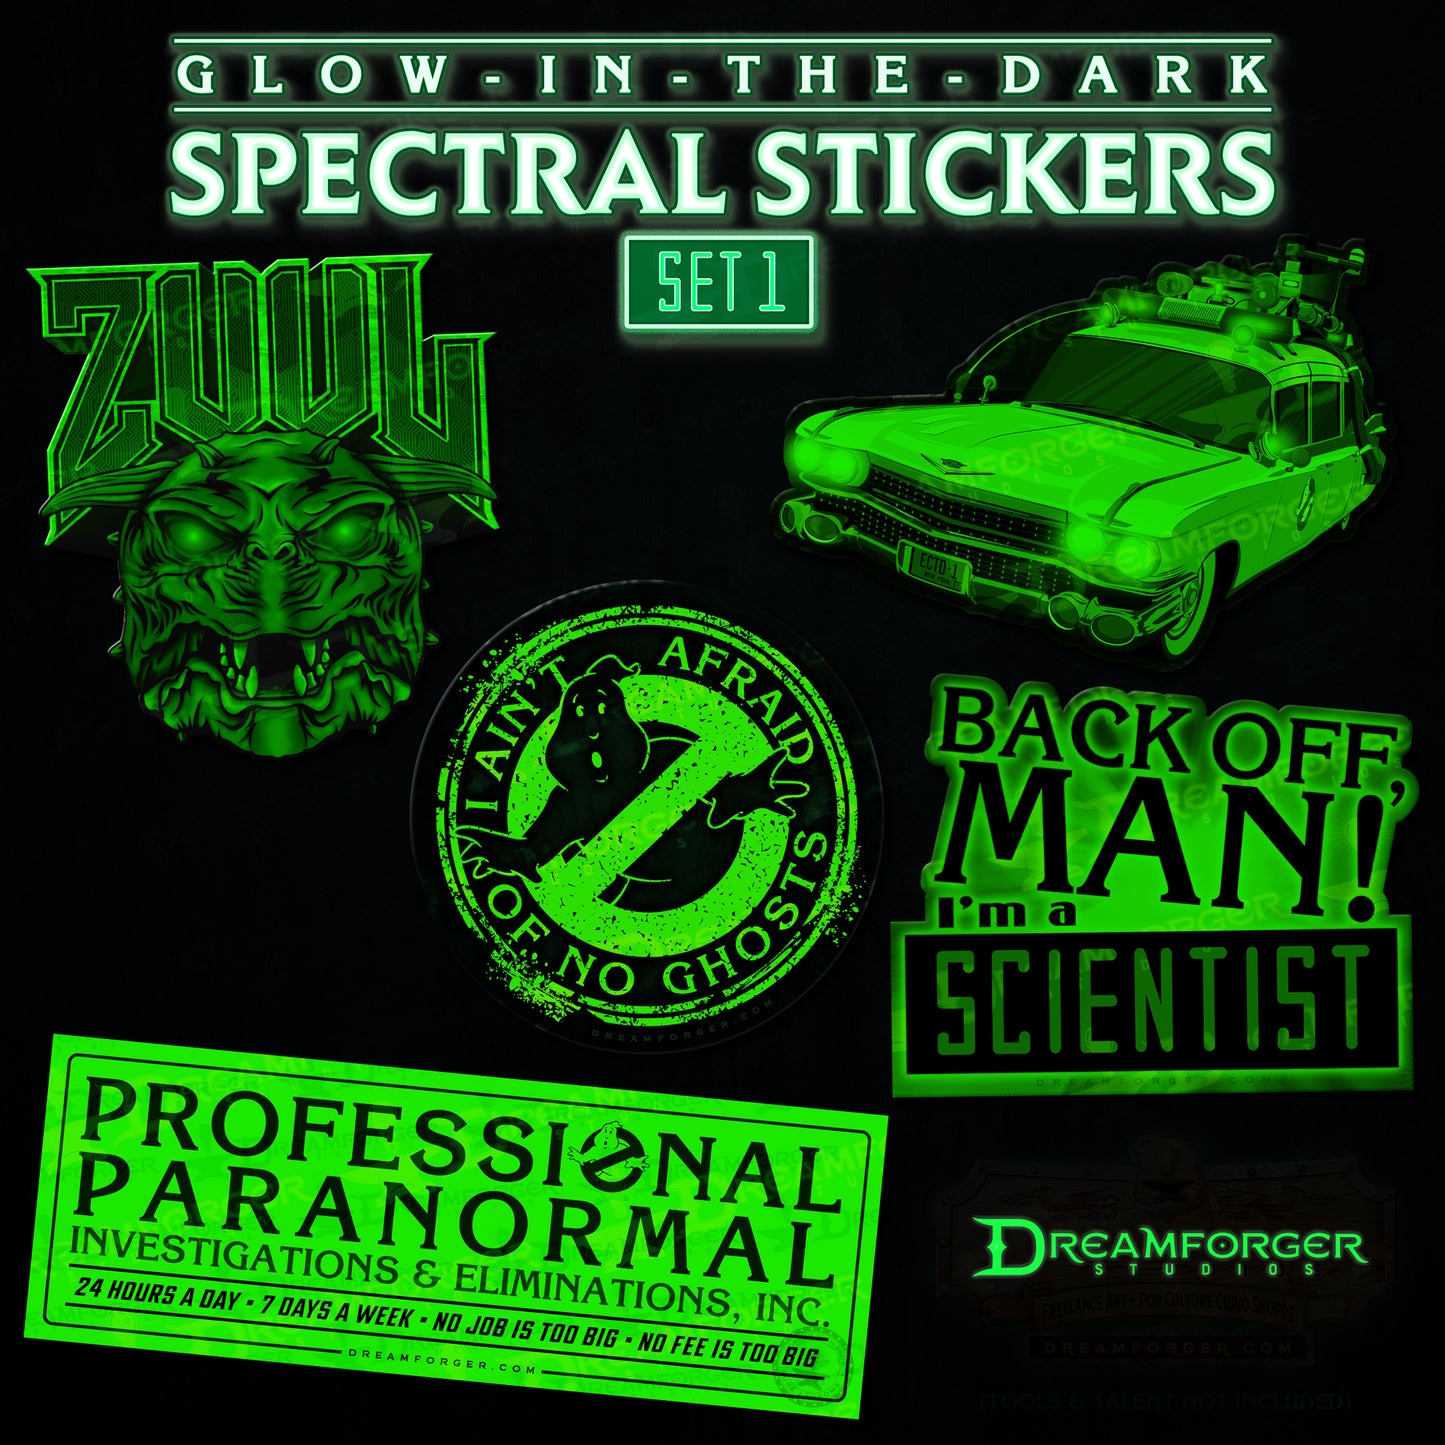 GB Glow-In-The Dark Spectral Stickers (Set 1)